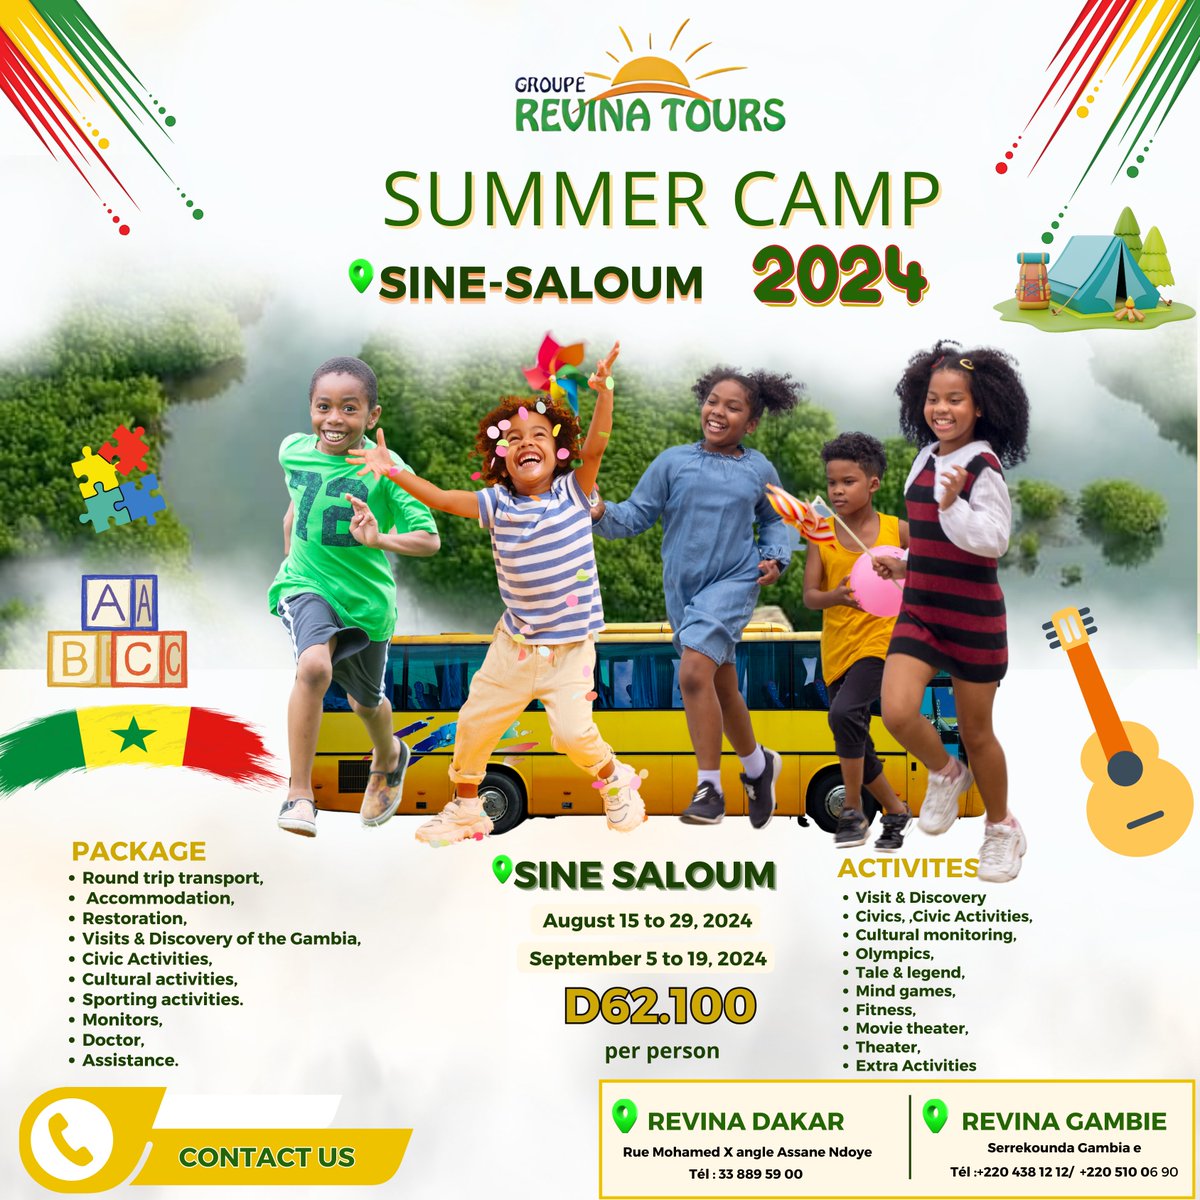 #SummerCamps #AdventureForKids #FamilyTravel #CulturalExploration #LearningThroughPlay #EducationalVacations #ChildDevelopment #MemoriesToLast #UniqueExperience #BookNow'